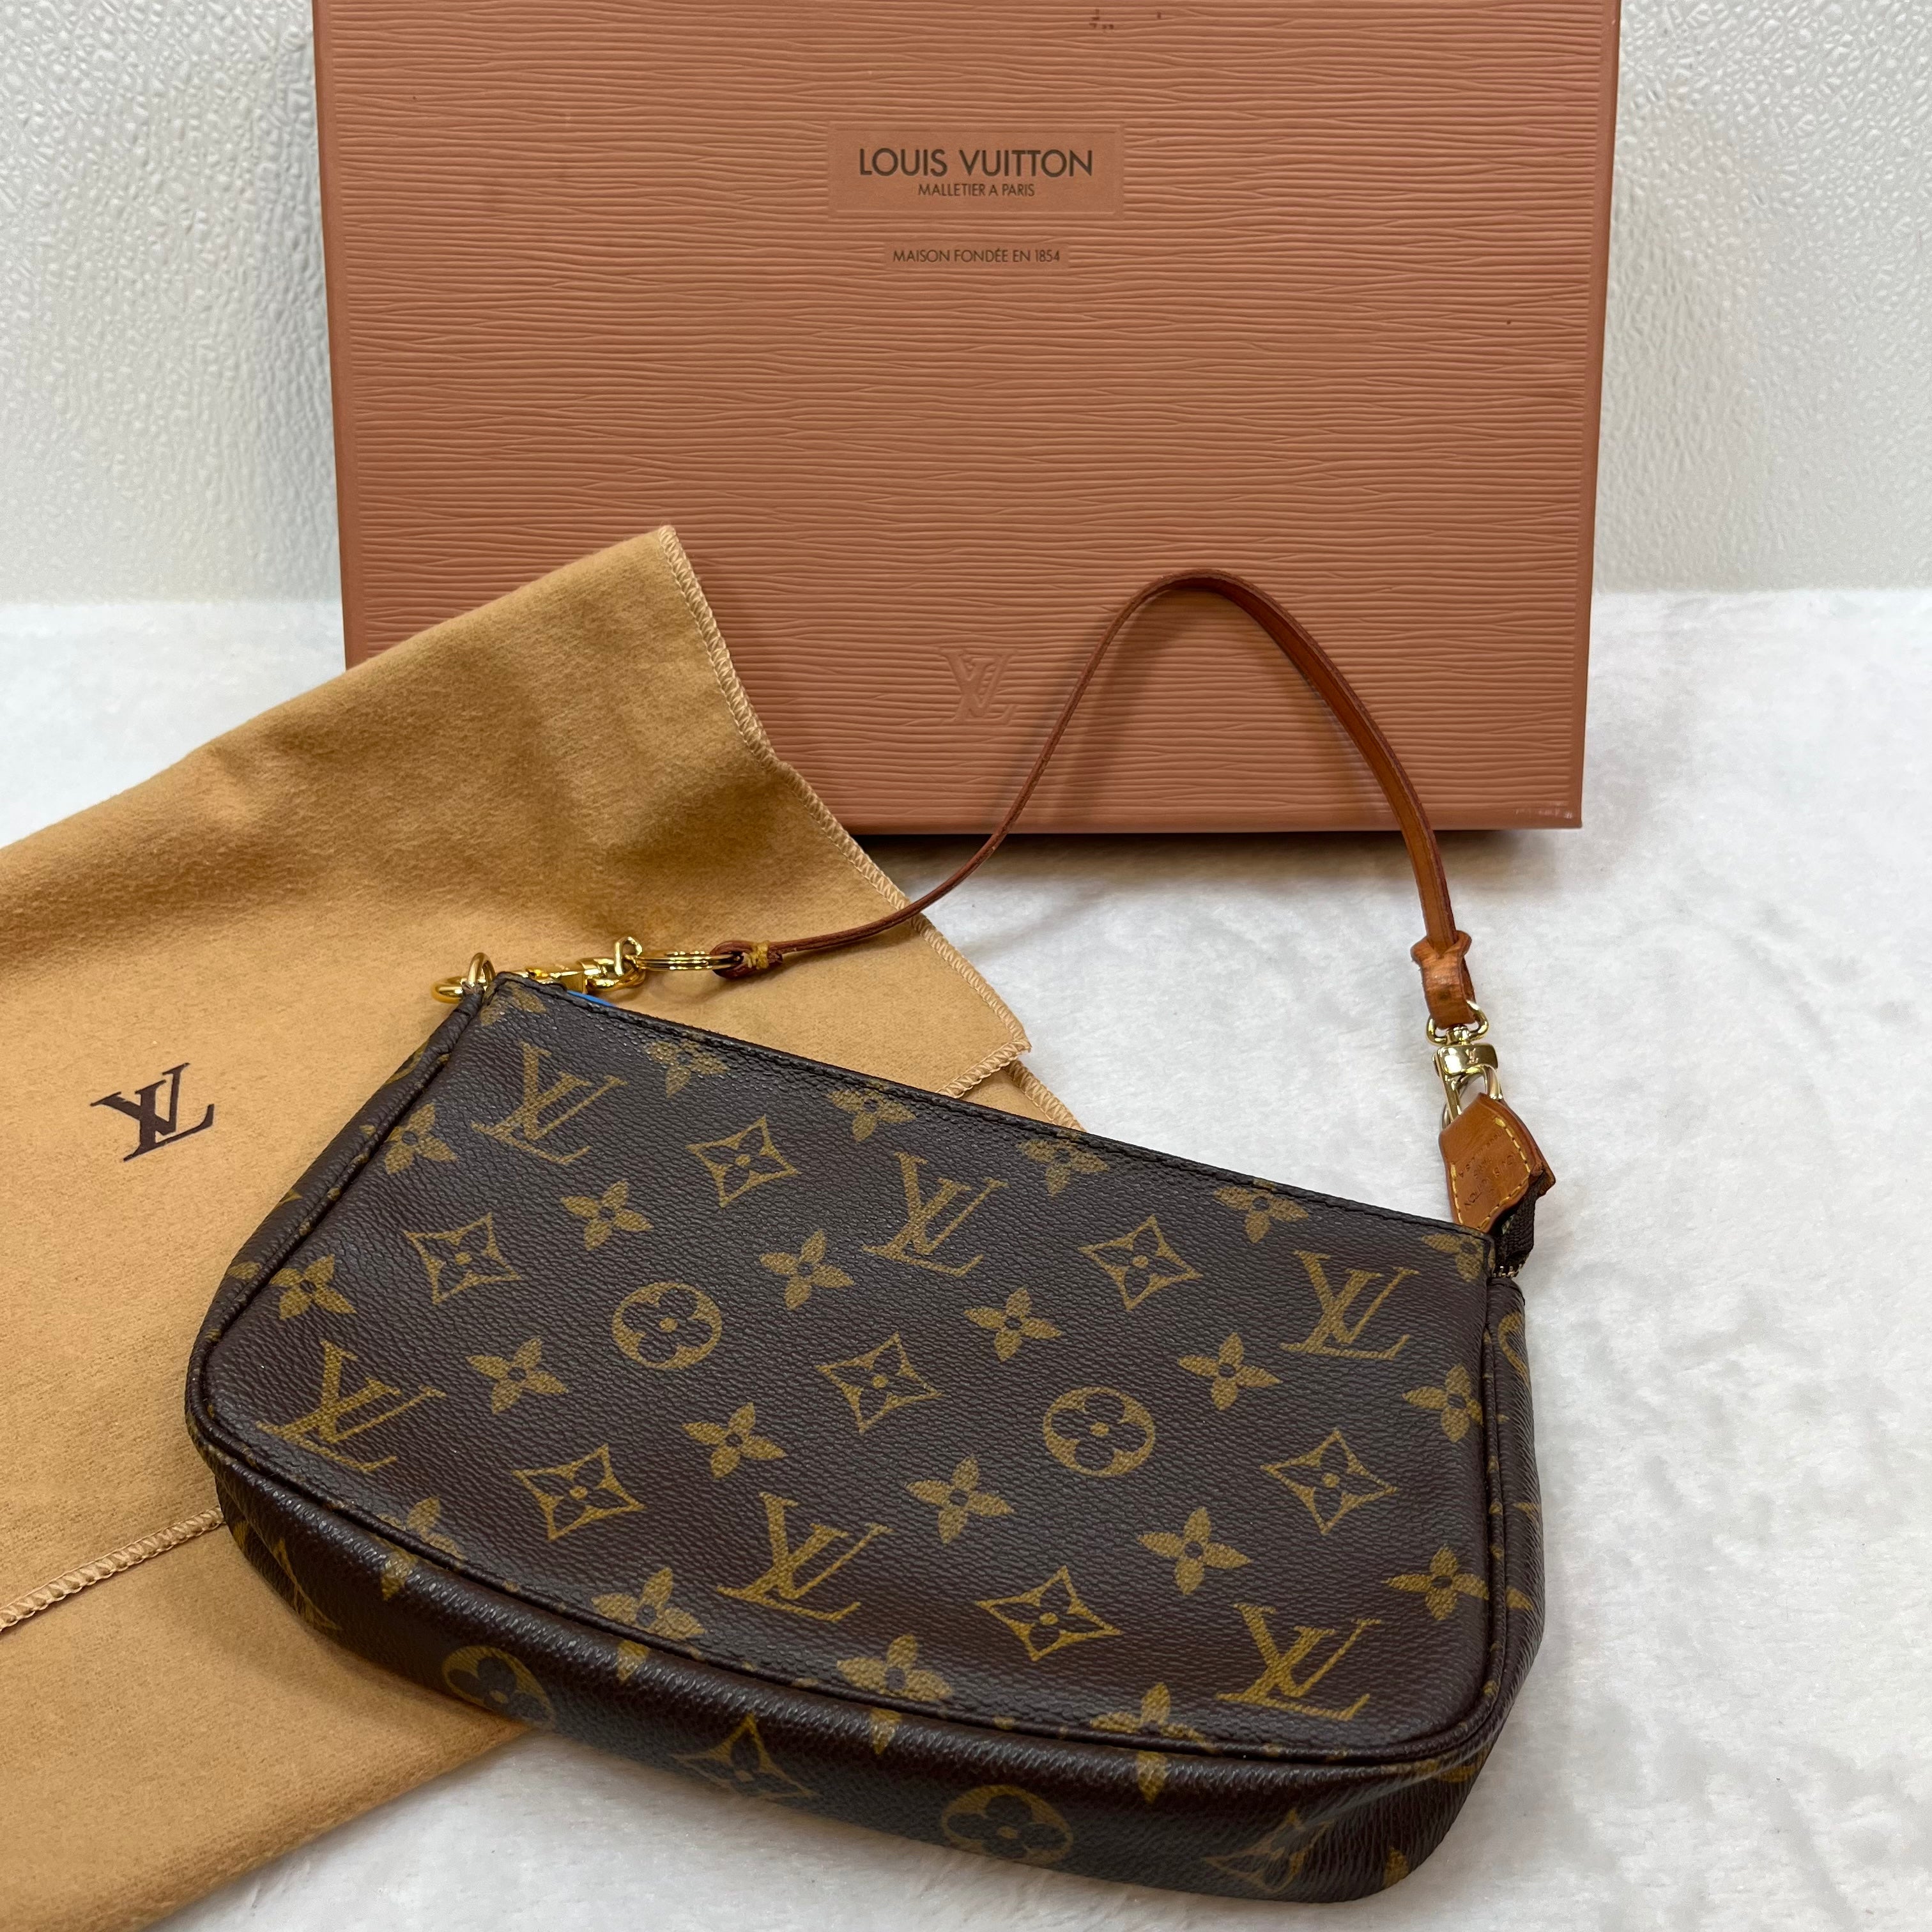 Handbag Designer By Louis Vuitton Size: Small